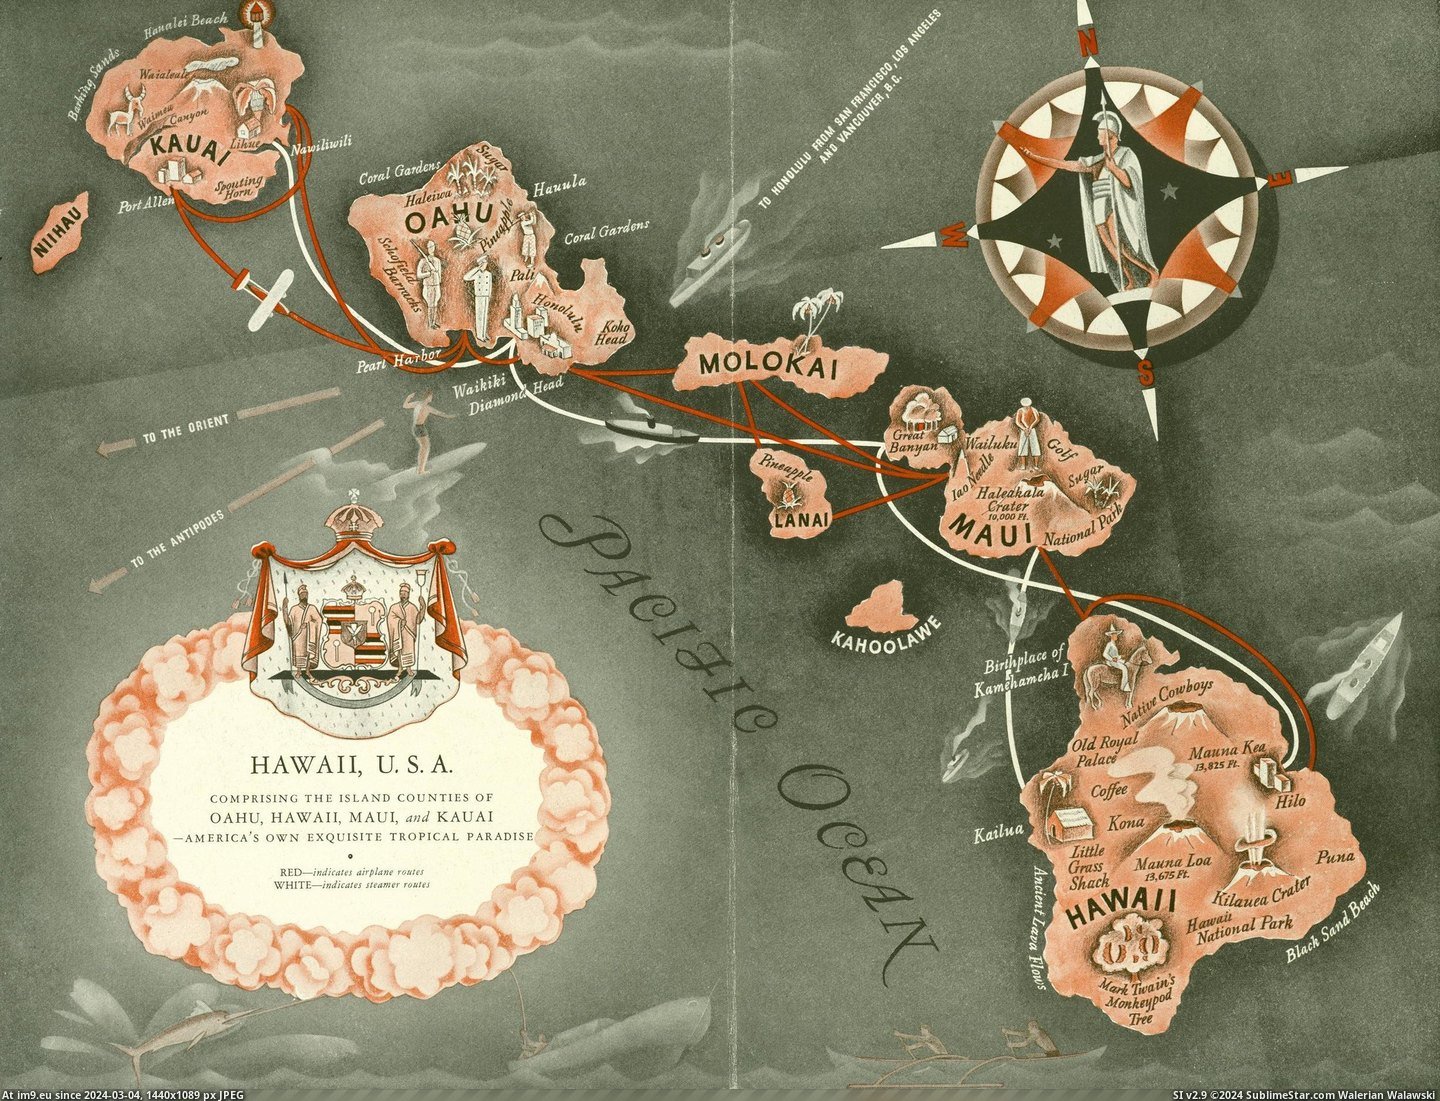 #Islands #Stewart #Hawaiian #Hawaii [Mapporn] The Hawaiian Islands from Norma Stewart's 1935 Aloha Hawaii scrapbook. [2,450 x 1,865] Pic. (Image of album My r/MAPS favs))